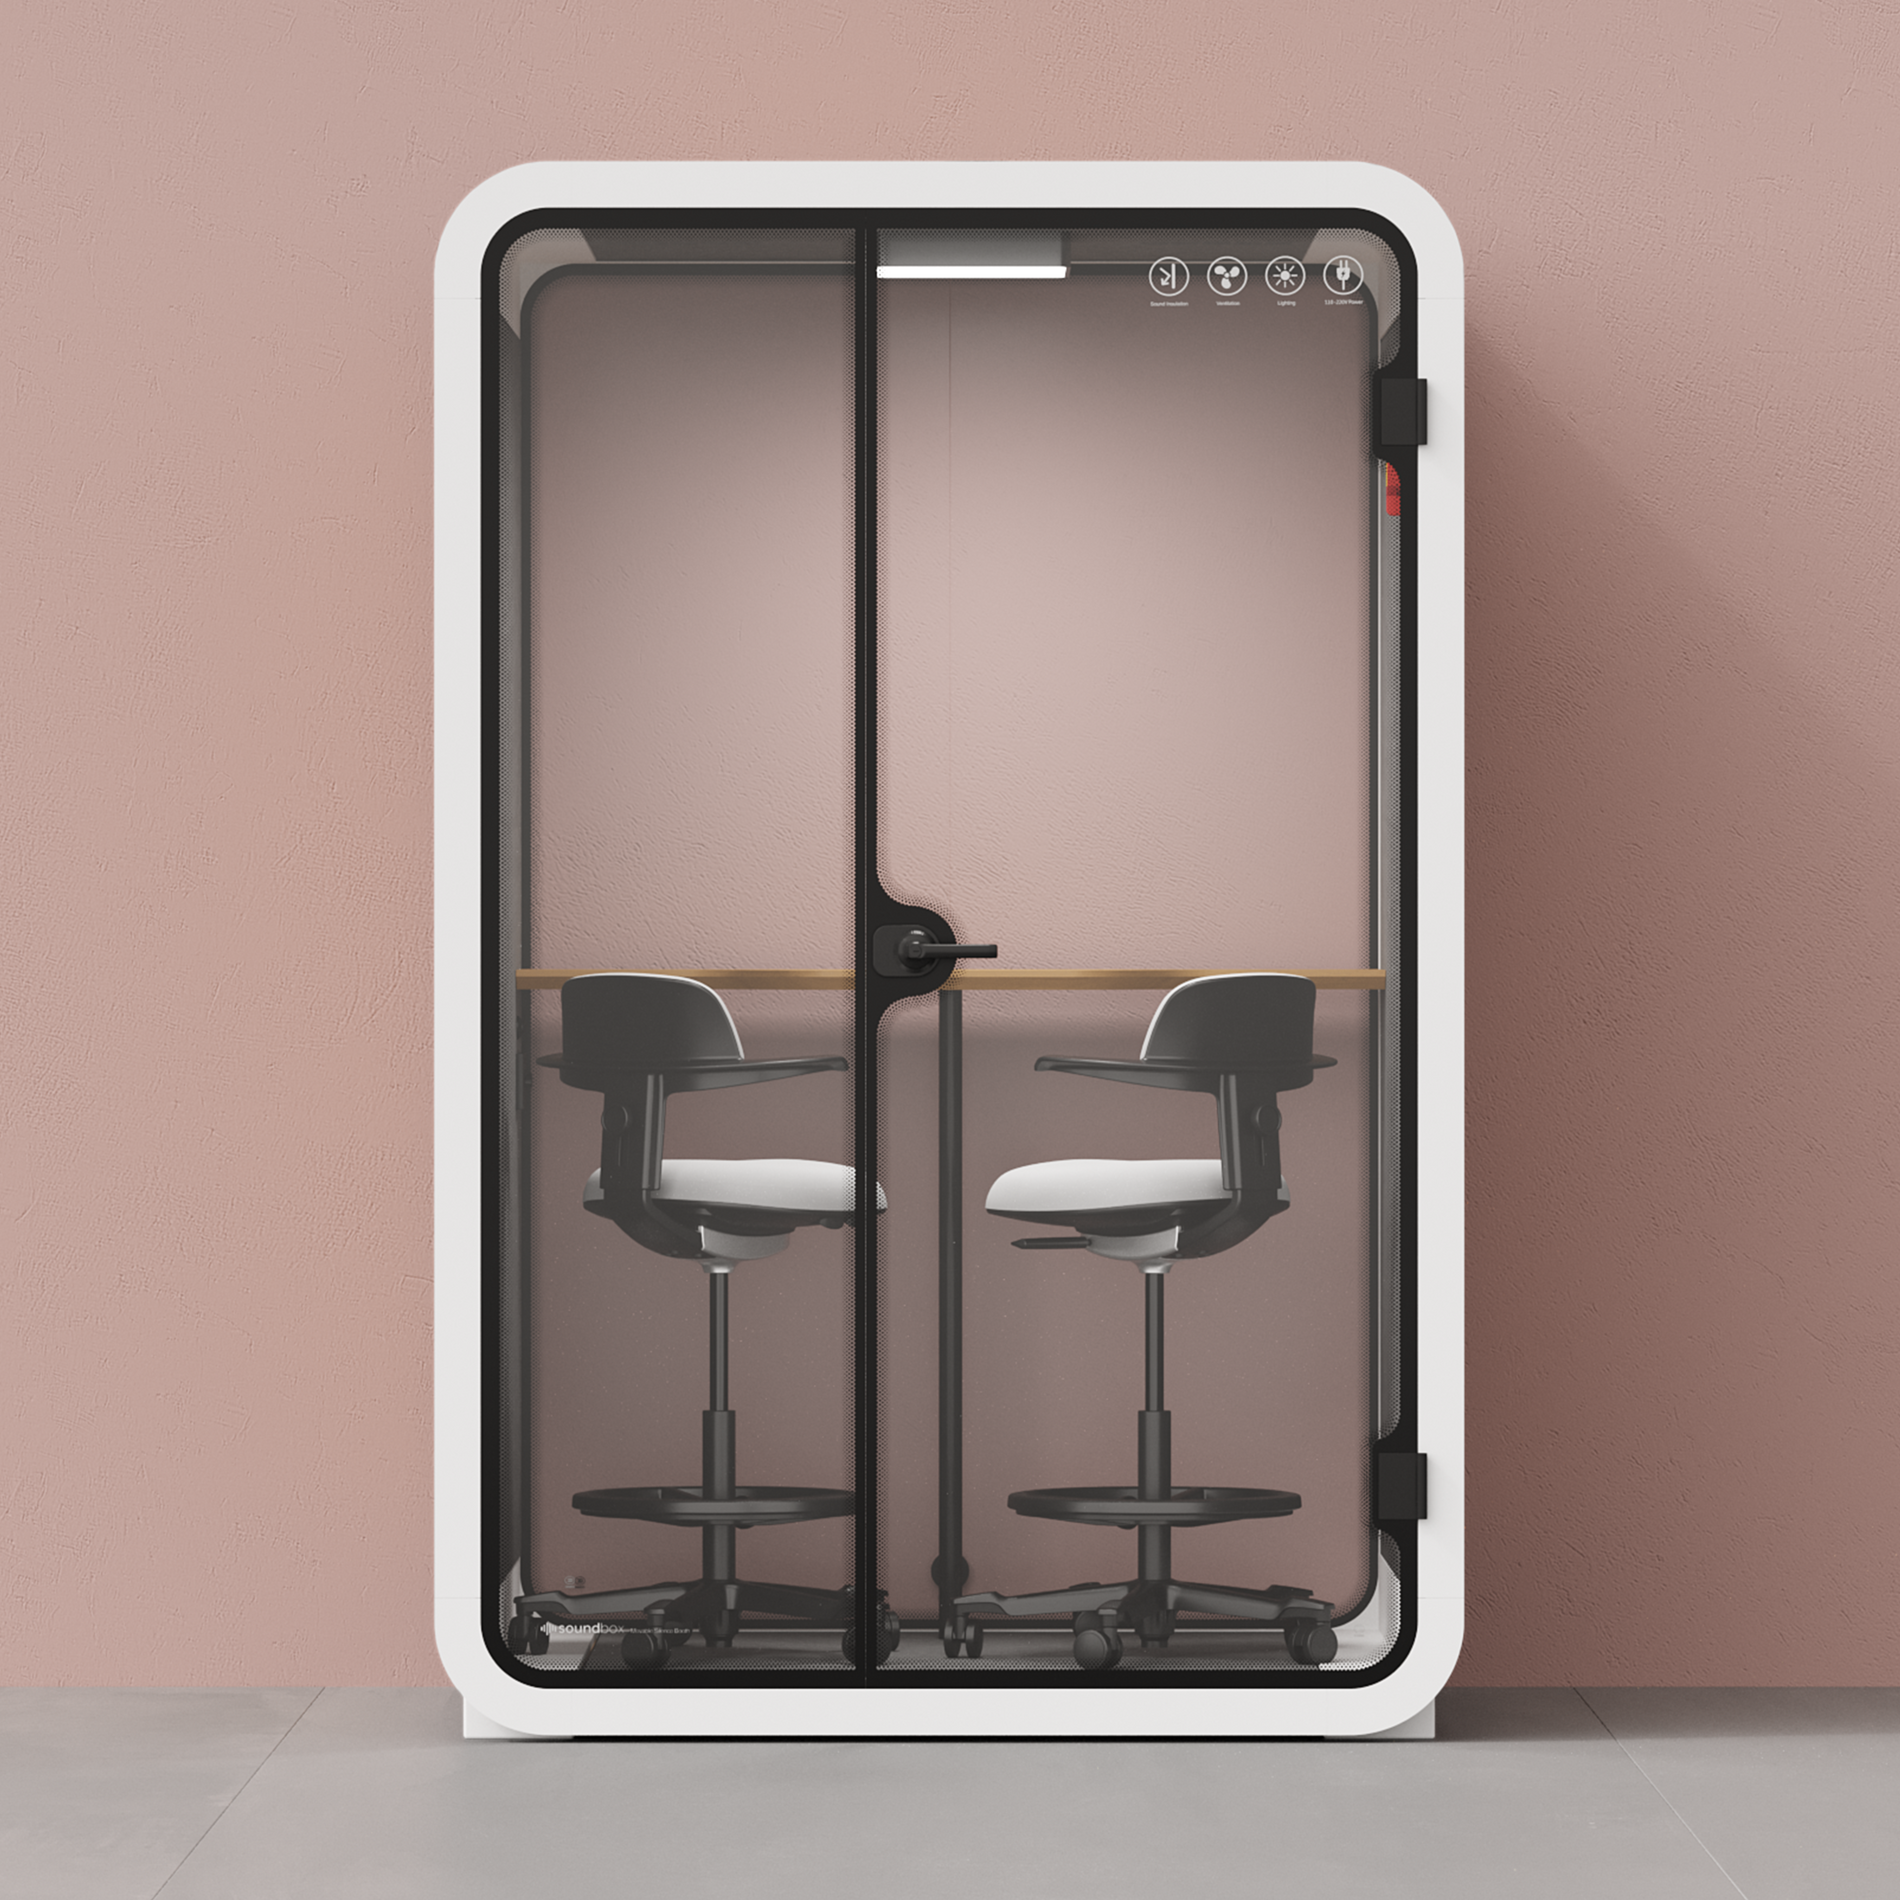 Quell - Office Pod - 2 PersonWhite / Dark Gray / Dual Zoom Room + Device Shelf + 2 Barstools